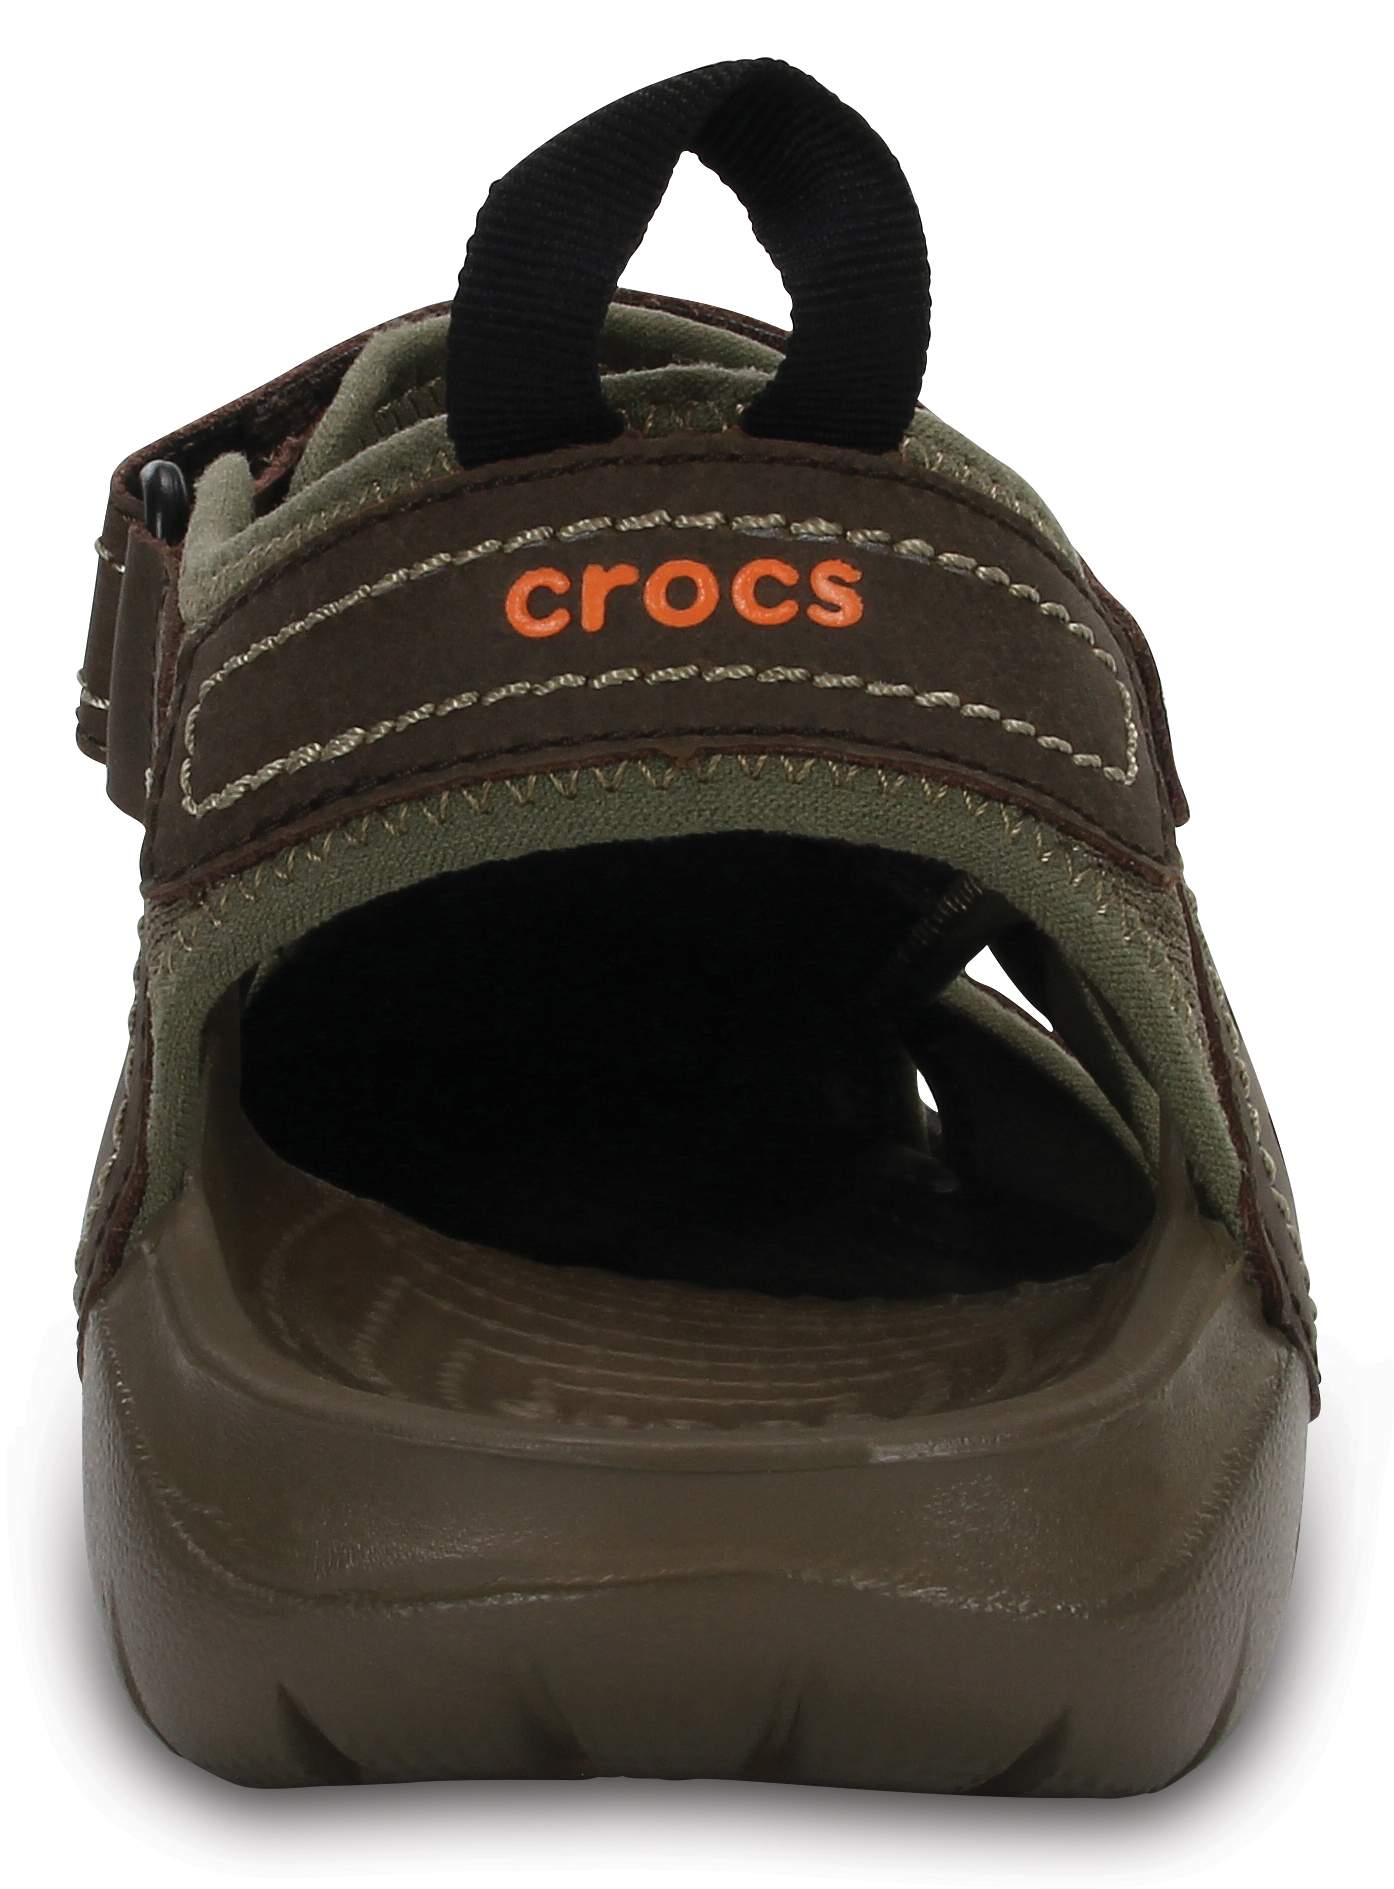 crocs swiftwater fisherman sandals